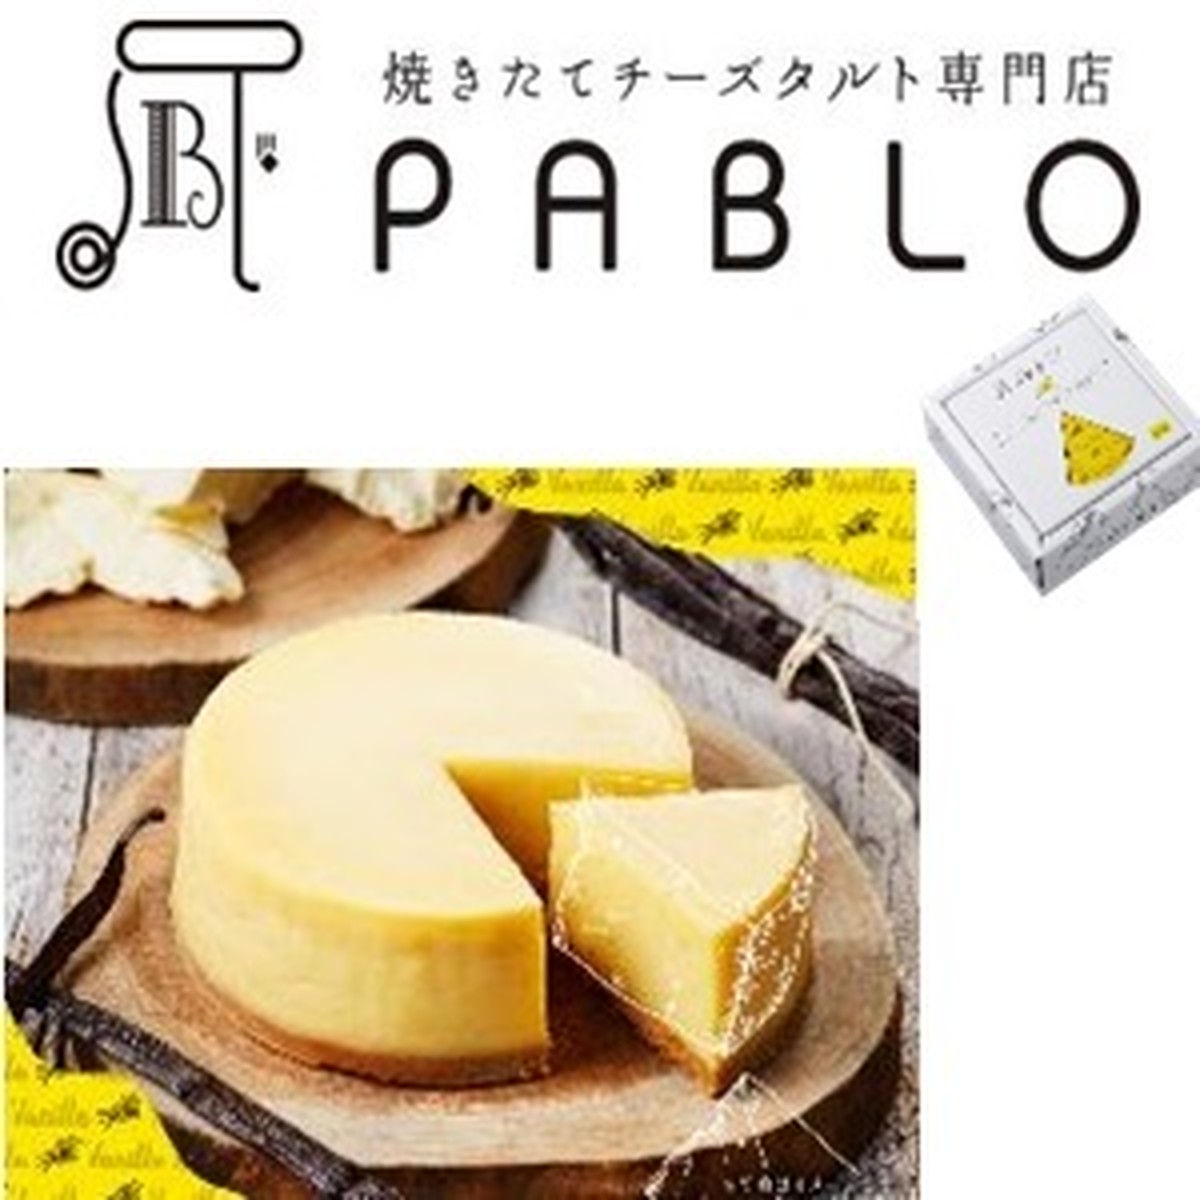 Pablo パブロのバニラ香るチーズタルト 約9 5cm 栄幸ダイレクトショップ